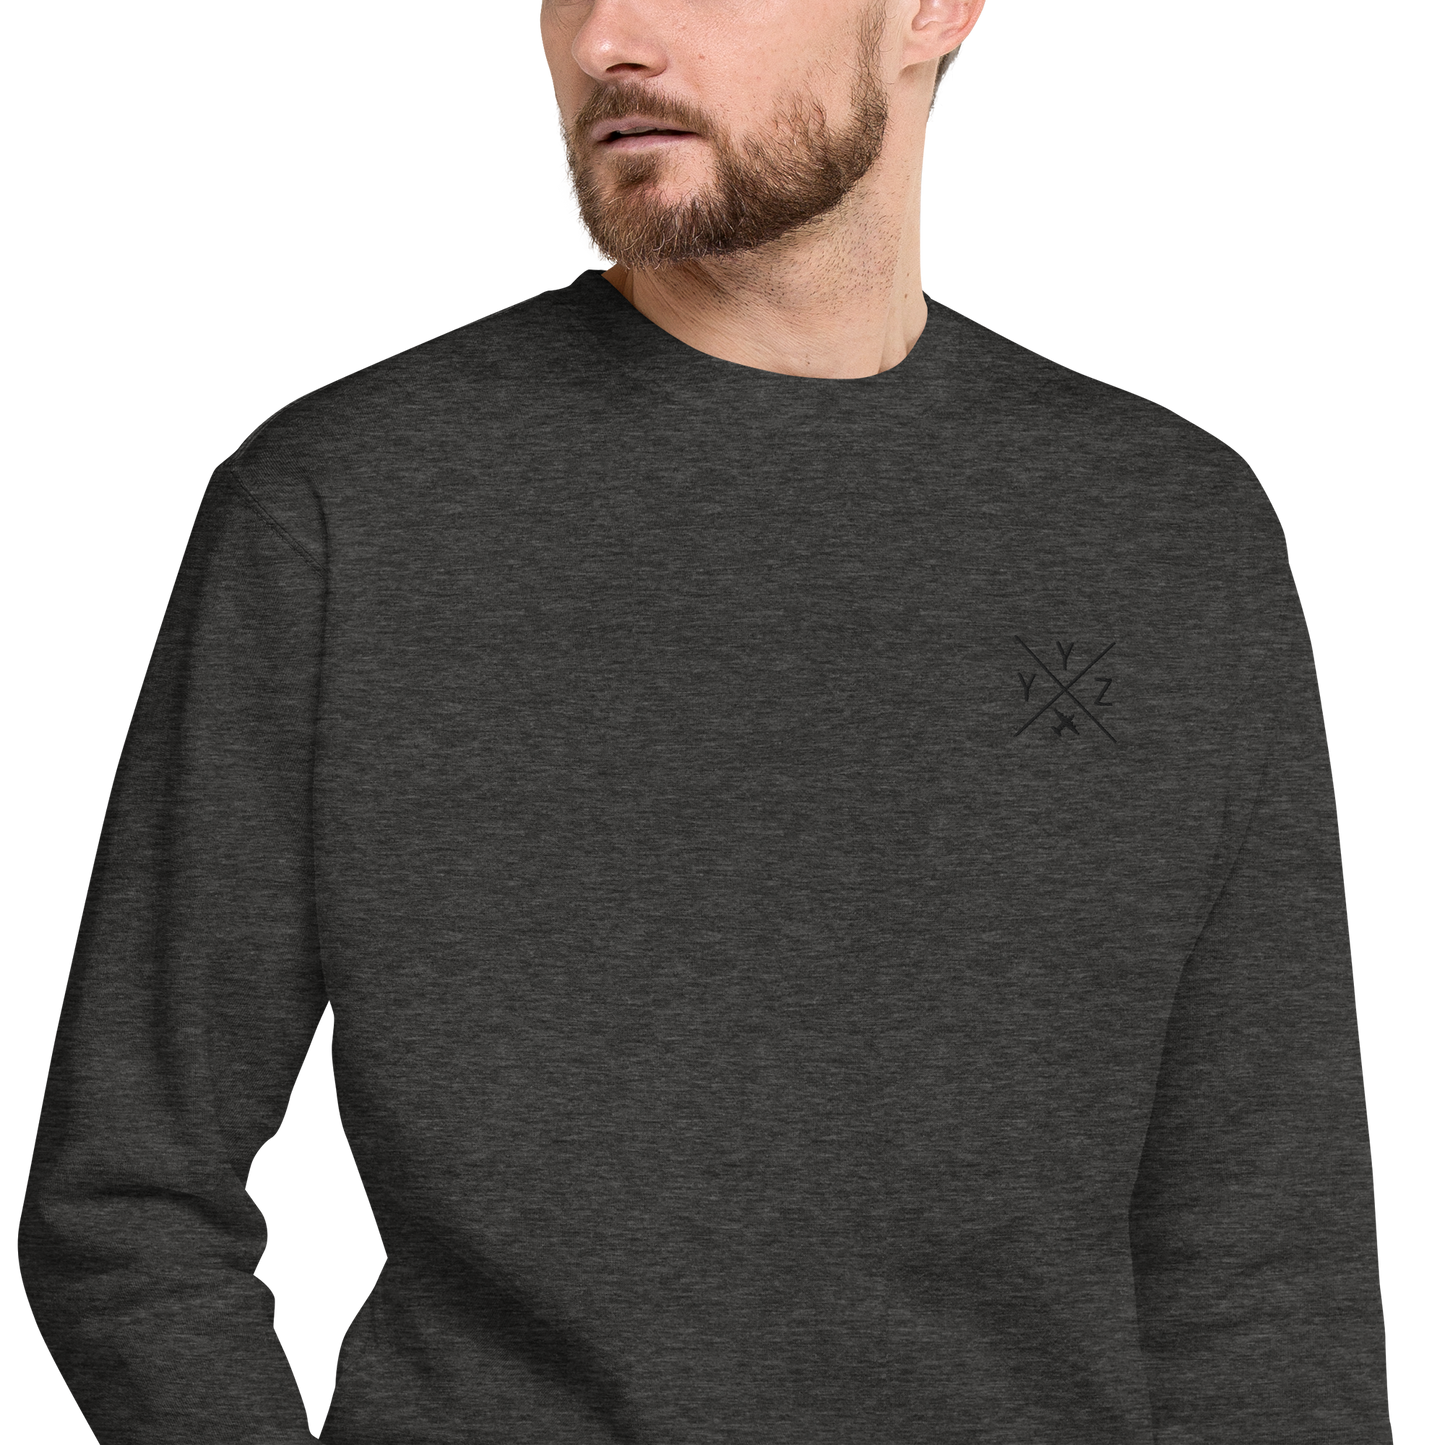 YHM Designs - YYZ Toronto Premium Sweatshirt - Crossed-X Design with Airport Code and Vintage Propliner - Black Embroidery - Image 07